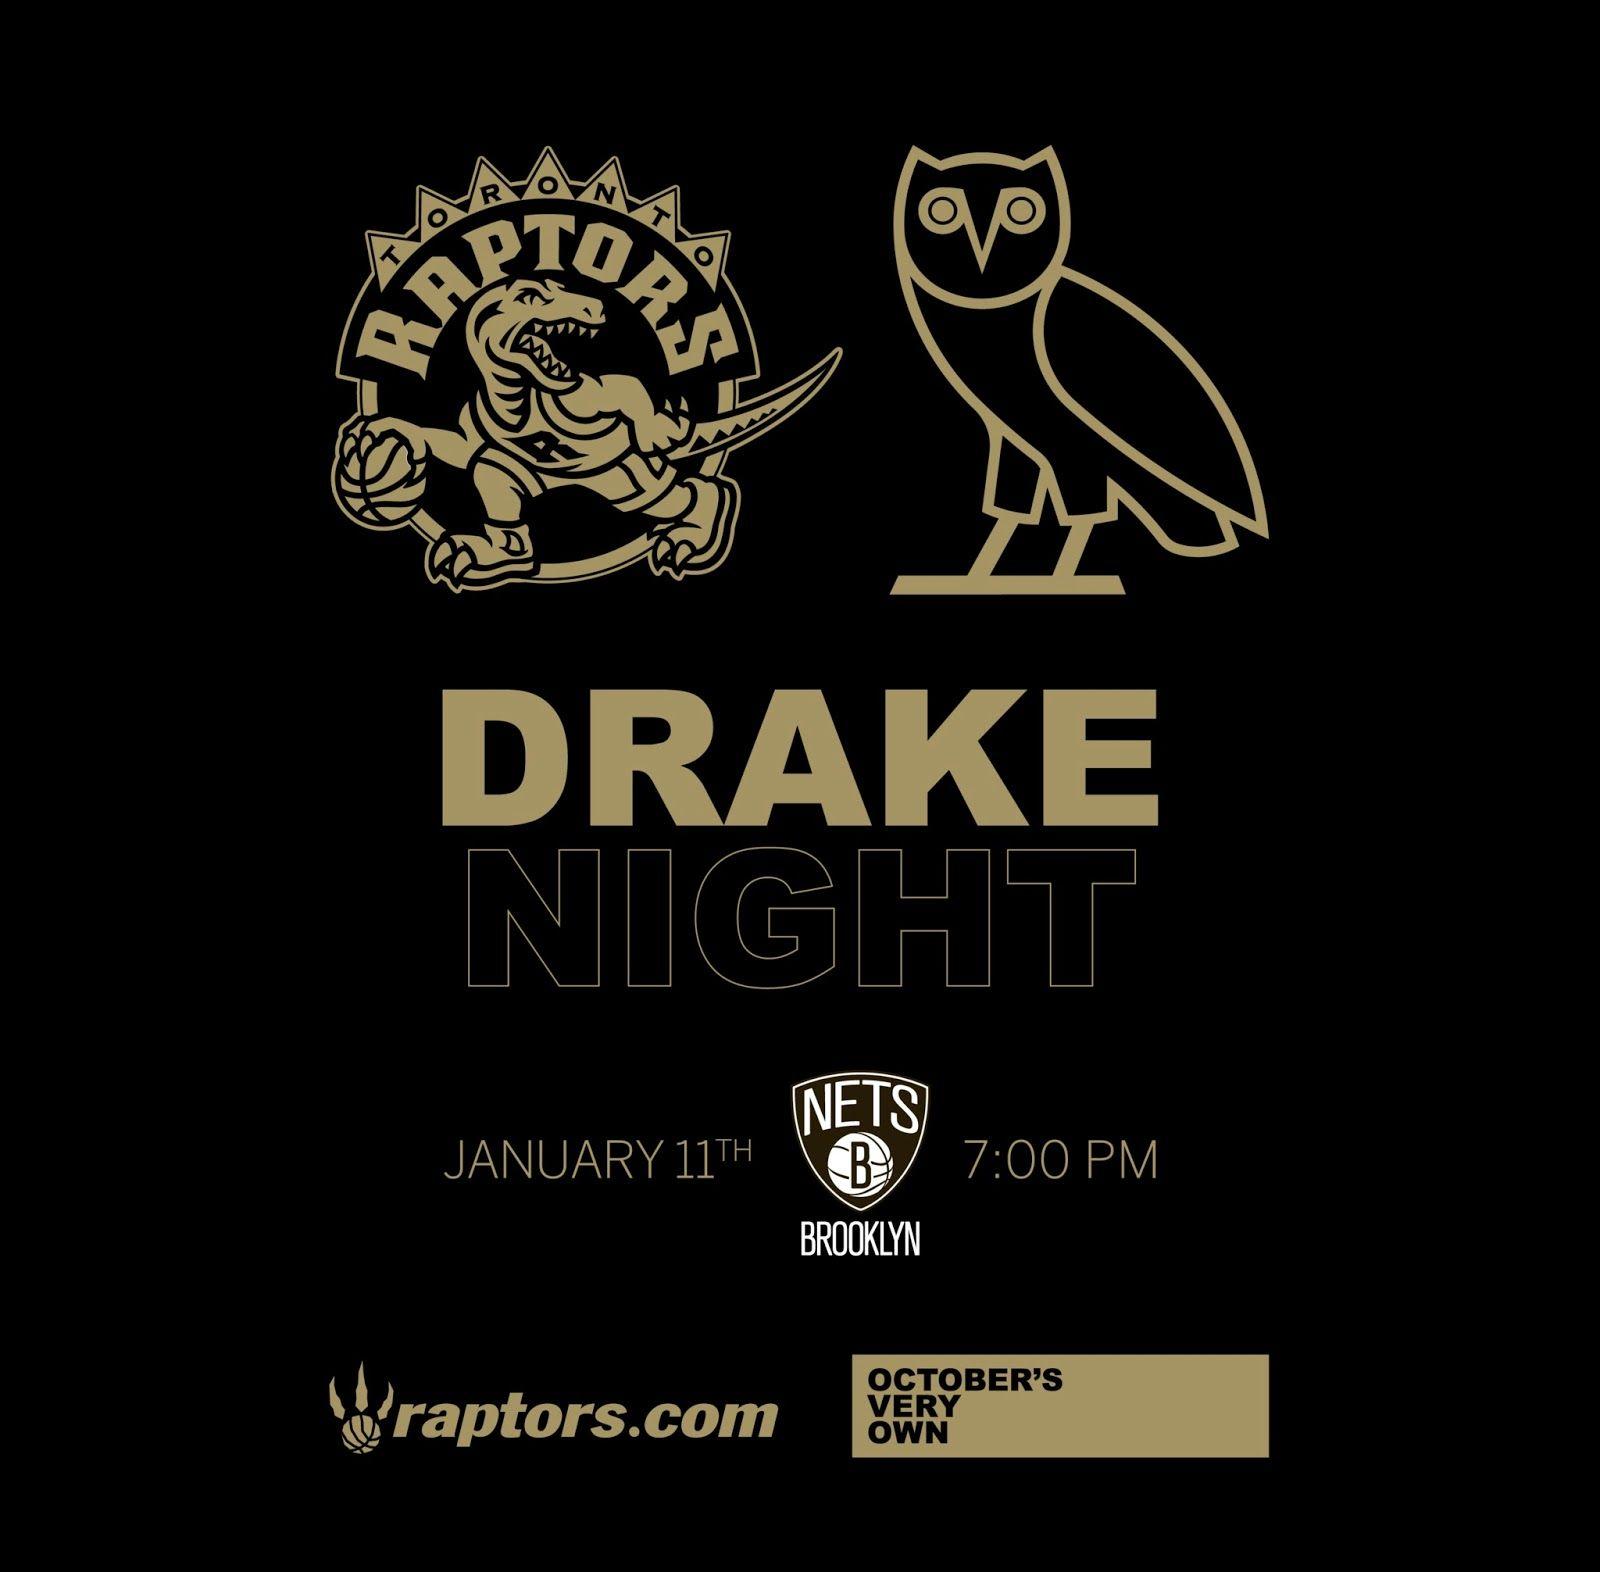 October's Very Own Logo - OCTOBERS VERY OWN: Toronto Raptors ~ Drake Night